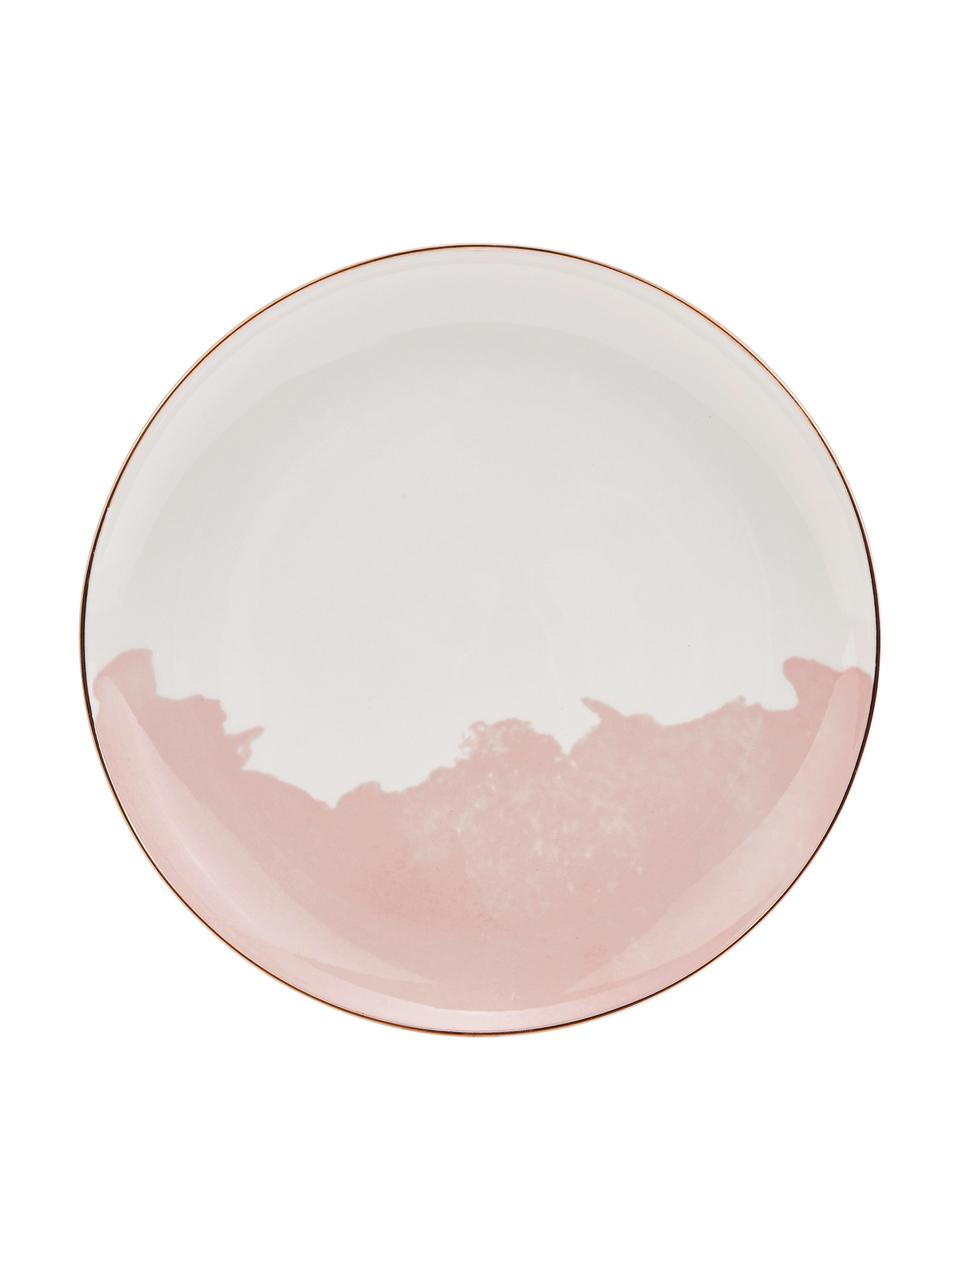 Platos postre de porcelana Rosie, 2 uds., Porcelana, Blanco, rosa, Ø 21 x Al 2 cm